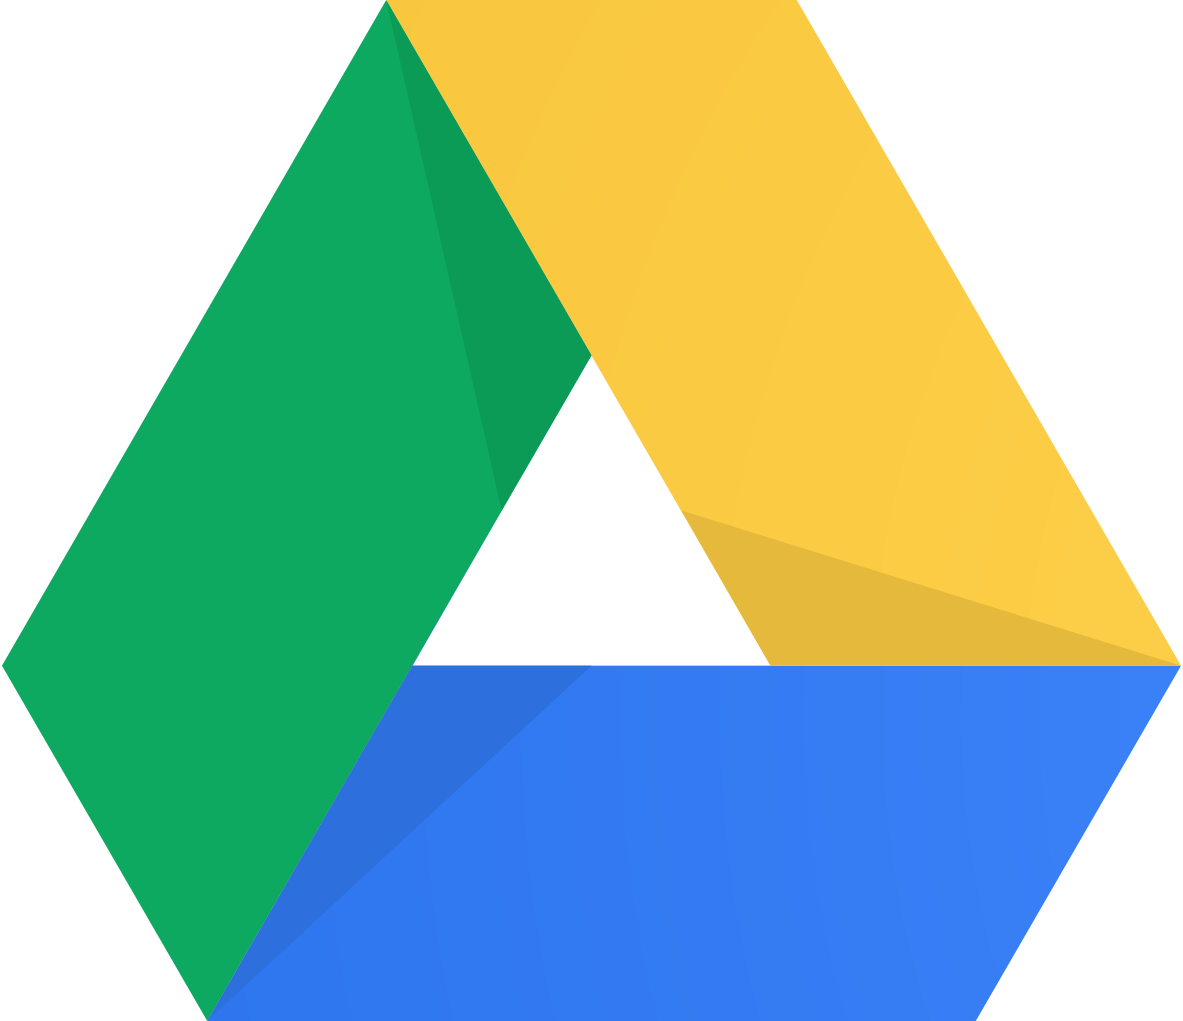 The Google Drive logo. A stylized triangle.